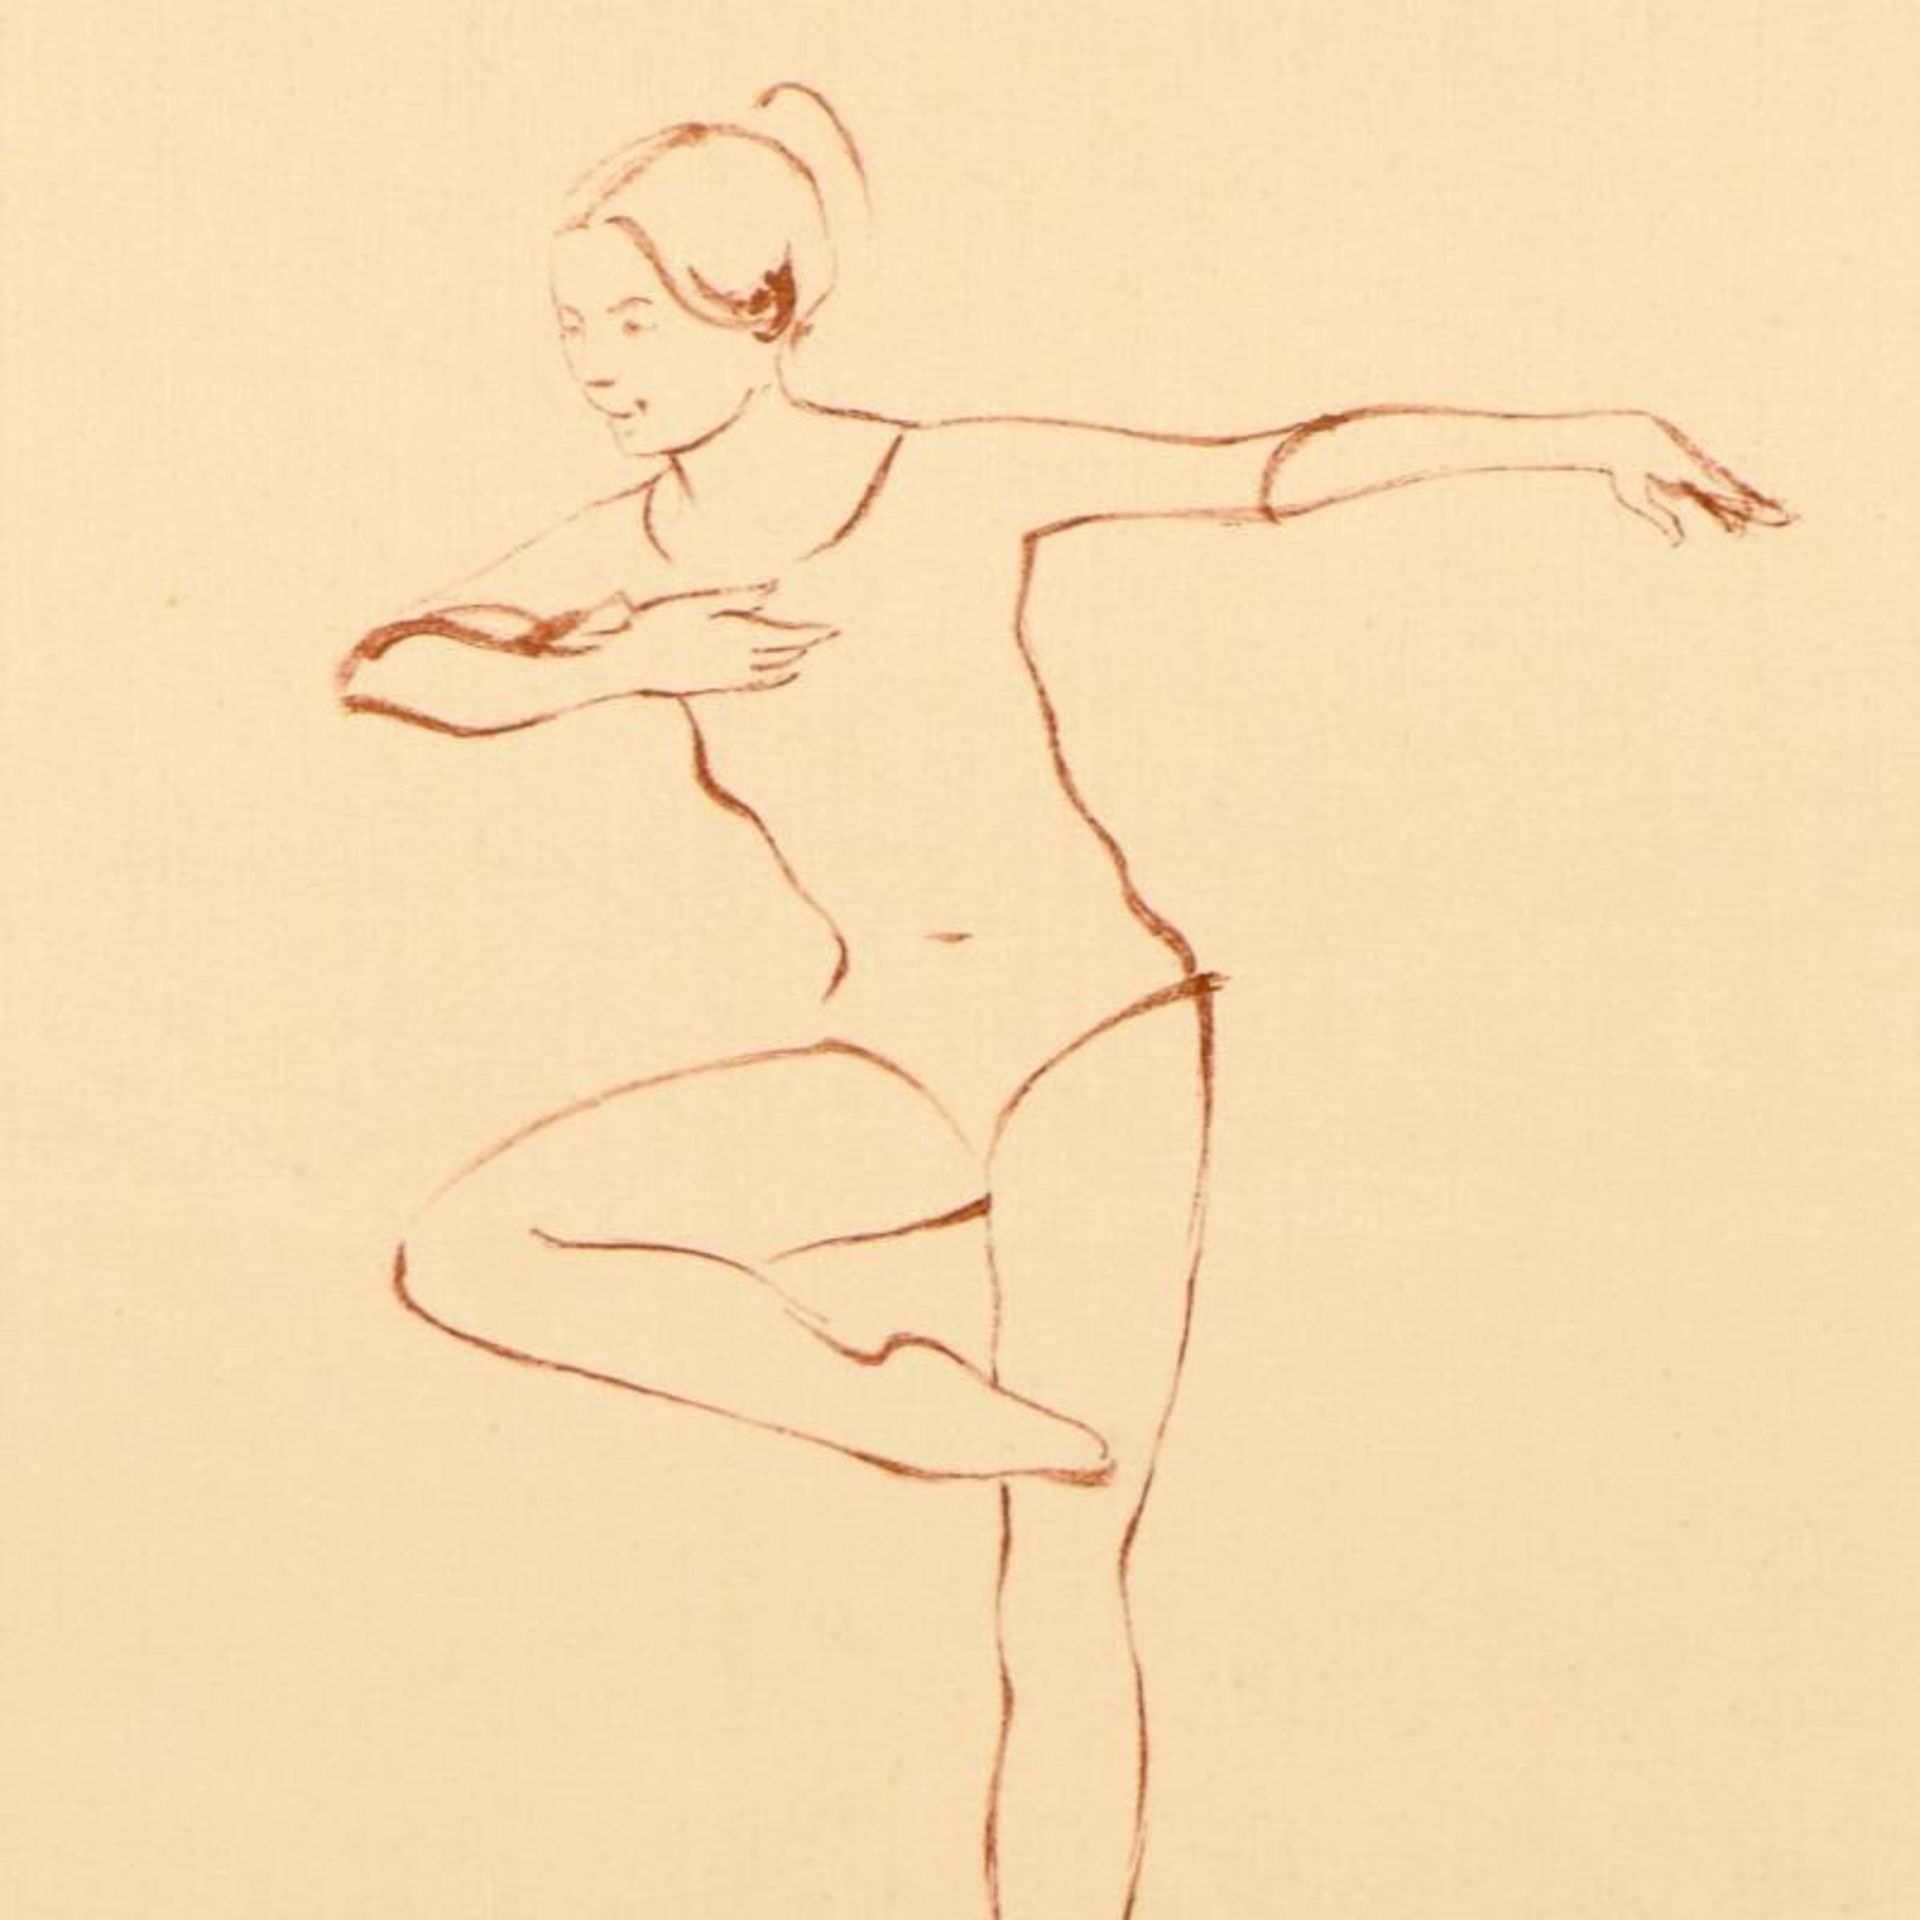 Pirouette by Hibel (1917-2014) - Image 2 of 2